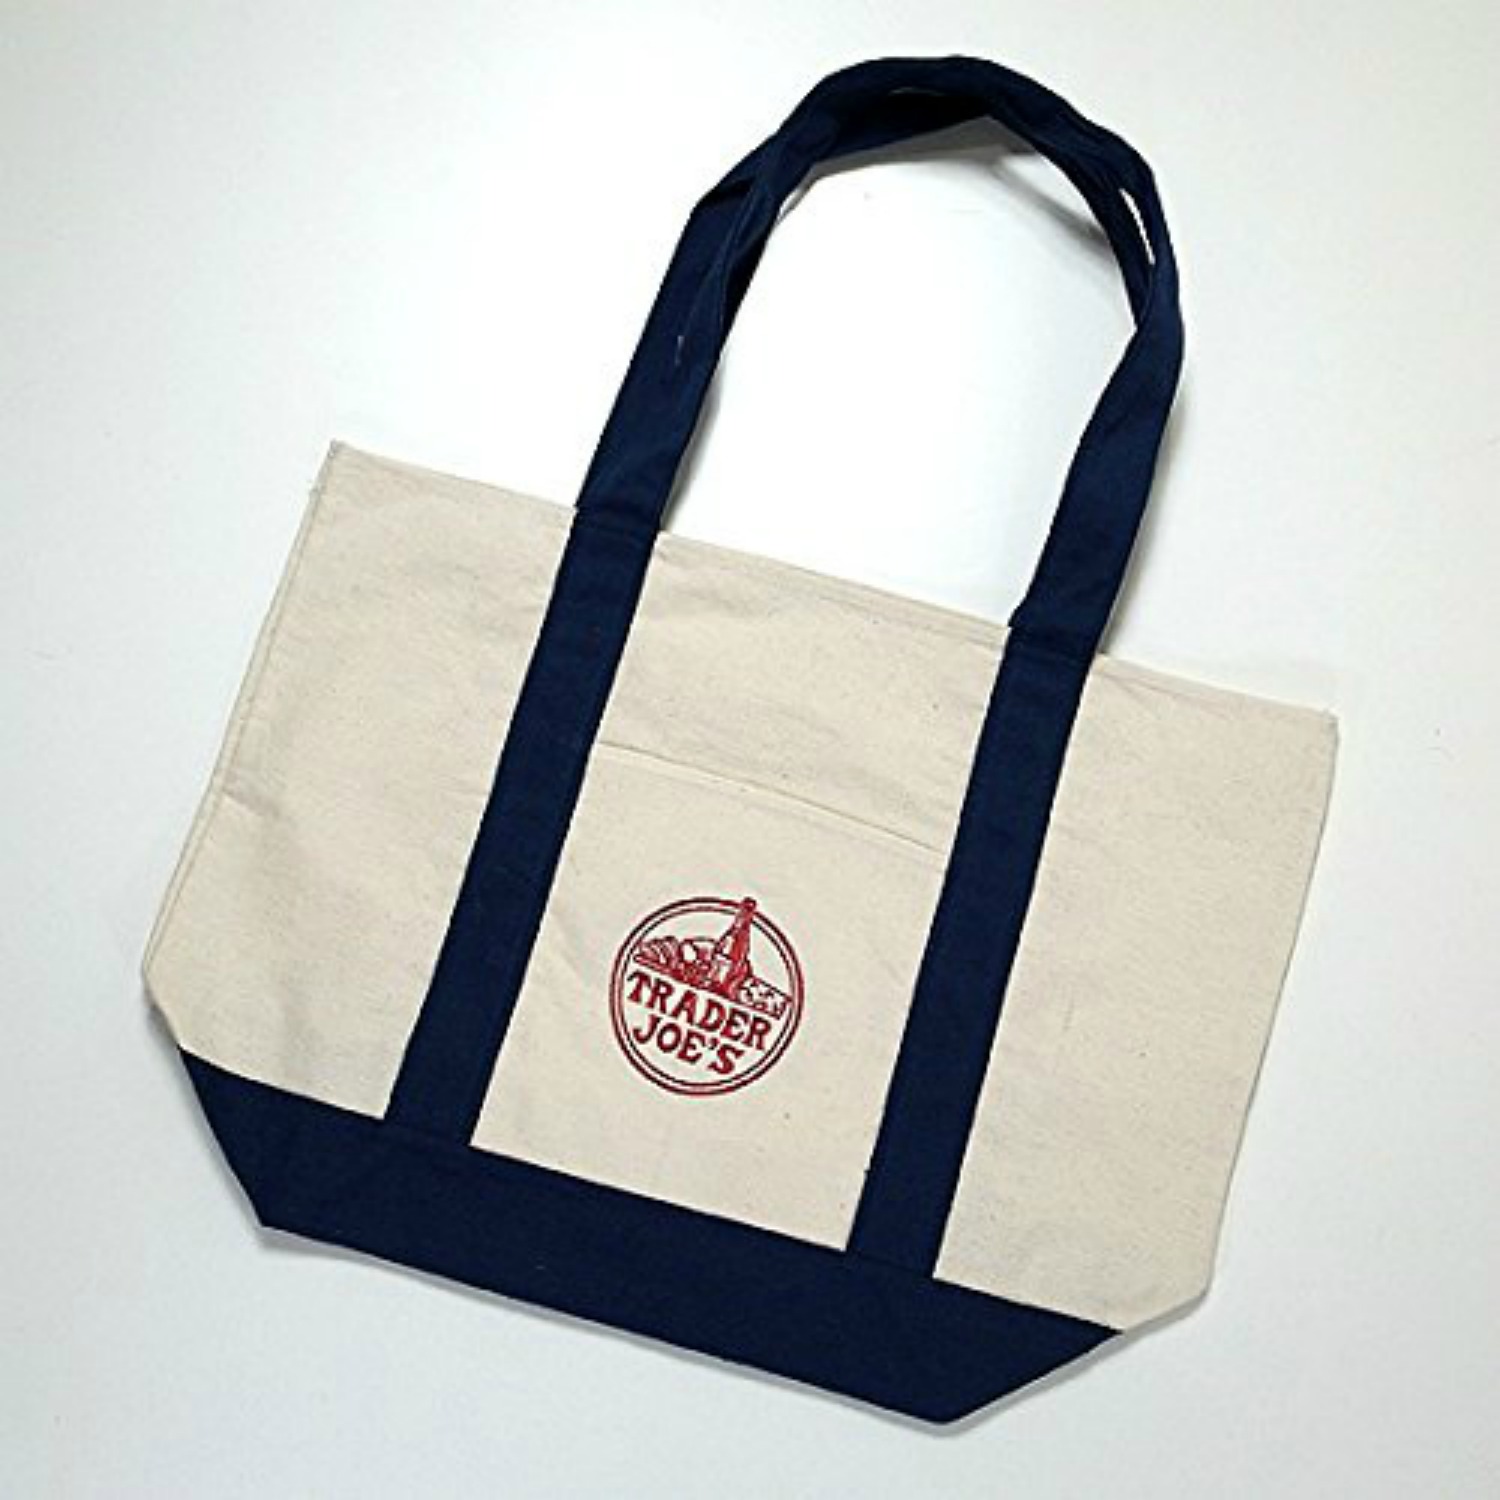 Reusable Fashion Tote Bag From Trader Joes 720189418440 | eBay